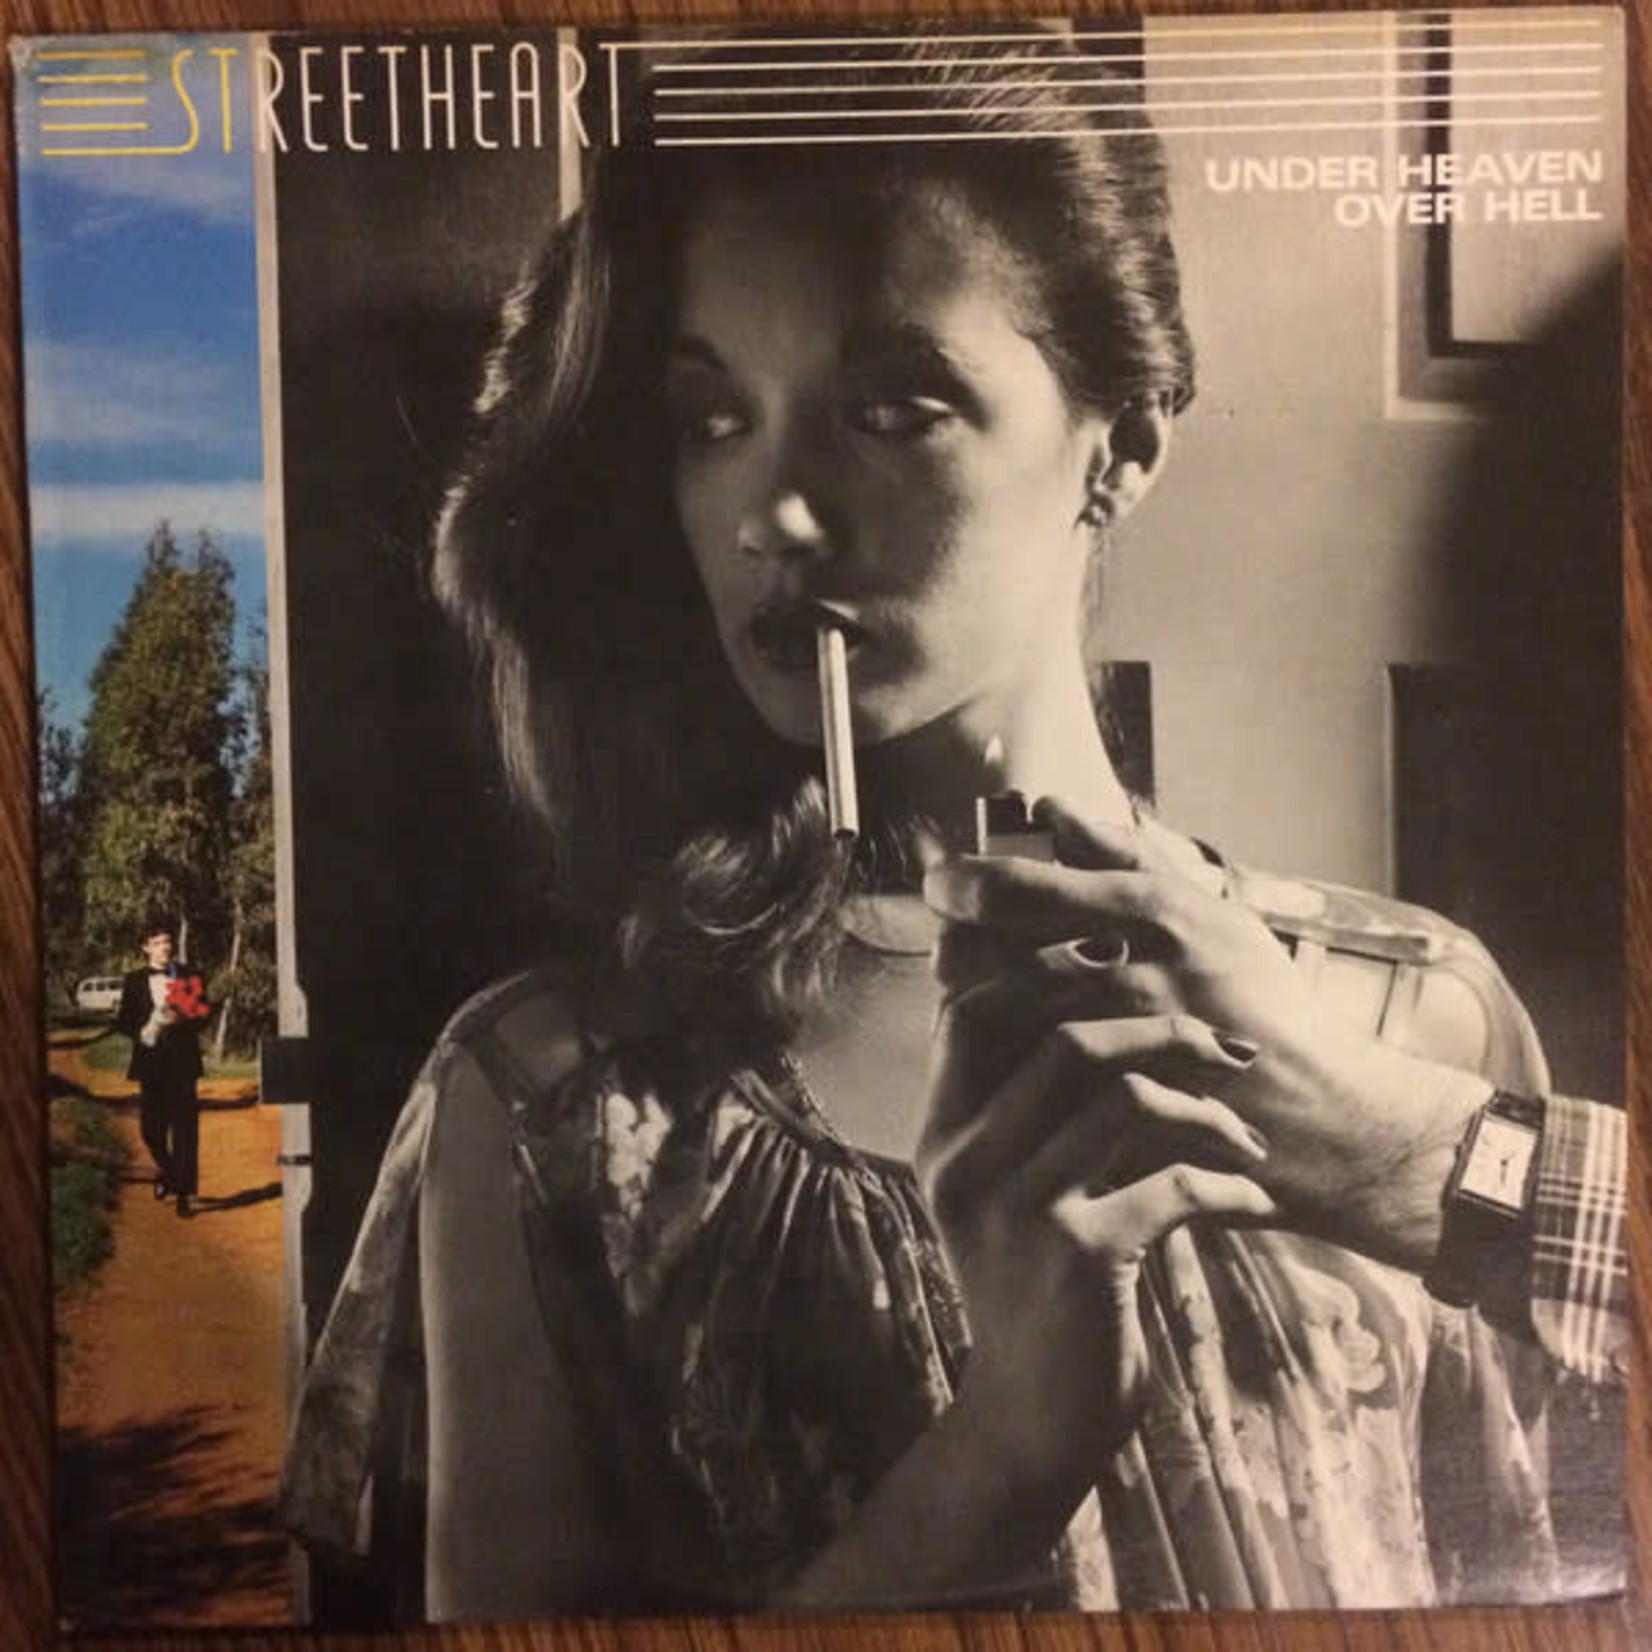 Streetheart Streetheart – Under Heaven Over Hell (LP, KCA 25001, VG)